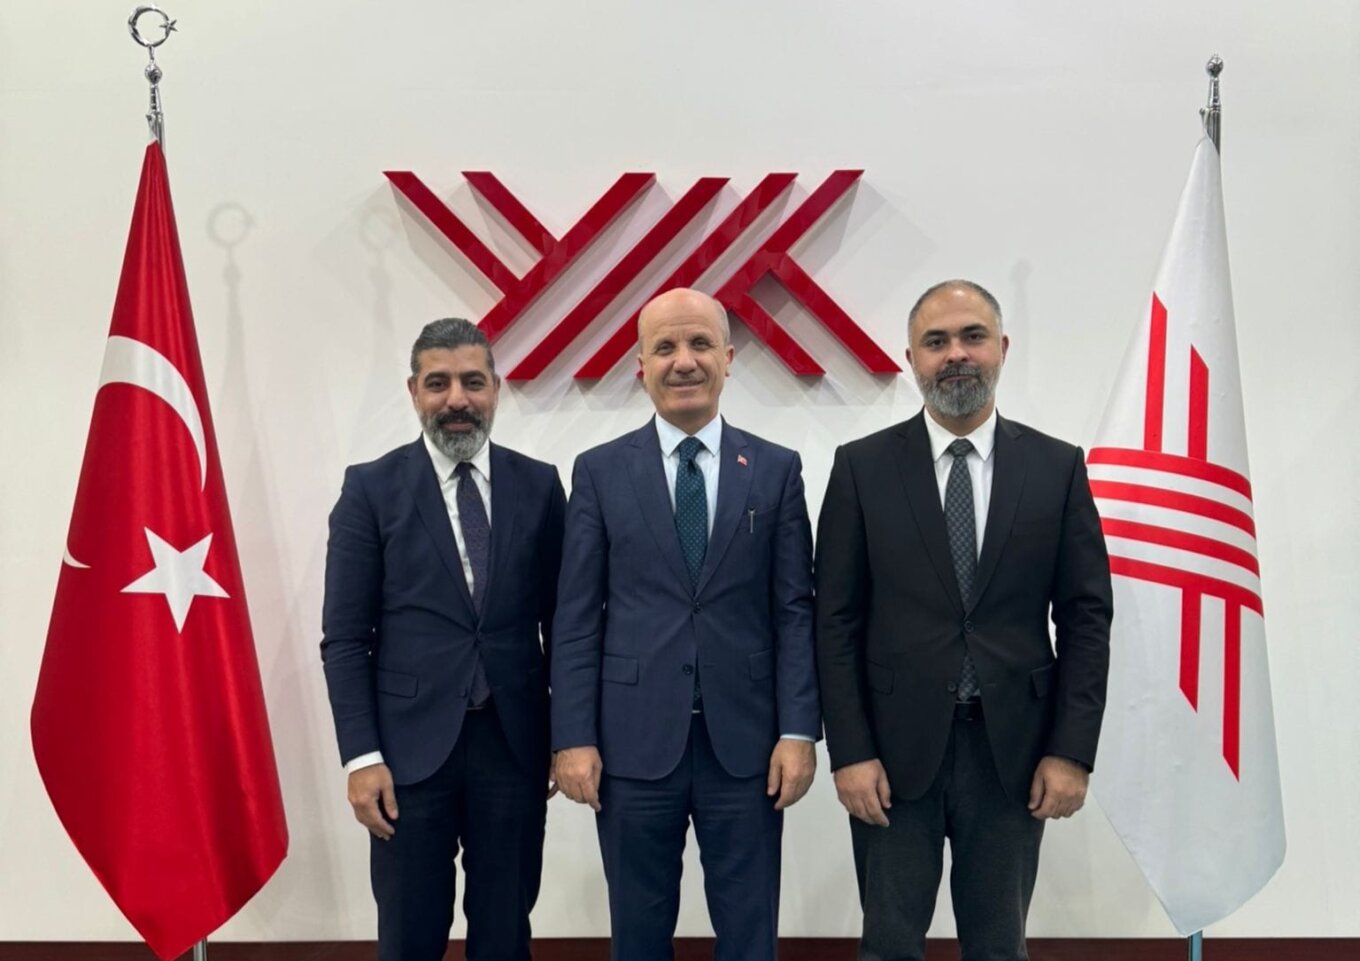 Rector Prof. Dr. Lutfi SUNAR, visited the President of the Council of Higher Education of the Republic of Türkiye, Prof. Dr. Erol ÖZVAR, in Ankara